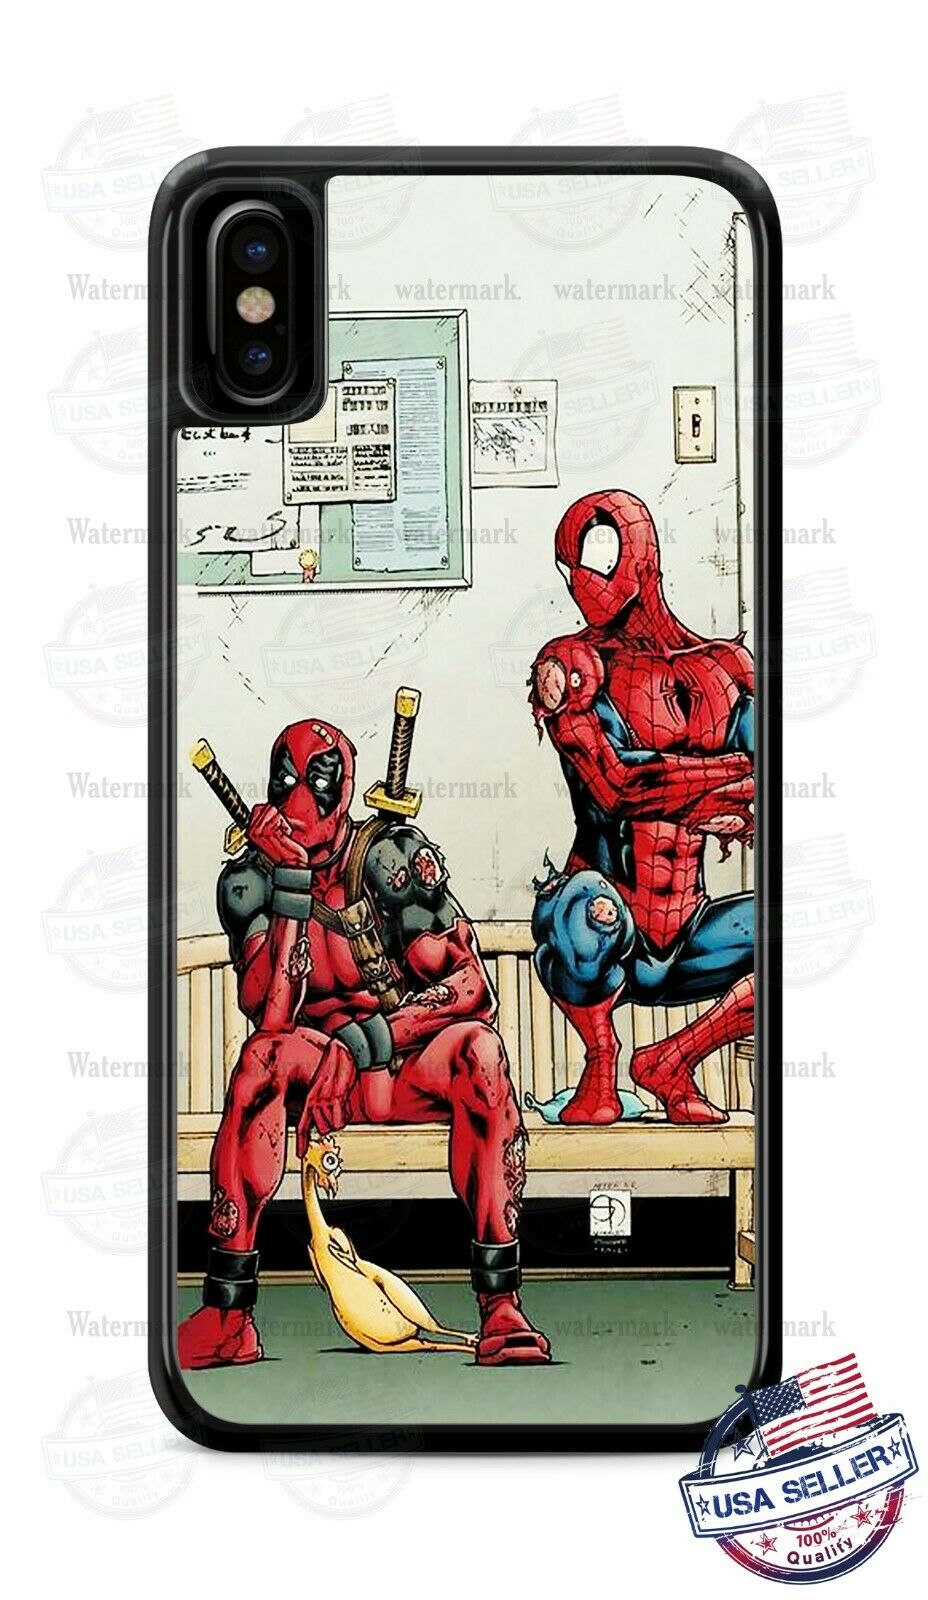 Spiderman Deadpool Superhero Phone Case Cover For iPhone 11 Samsung A20 LG etc pinkgurl4upinkgurl4u 